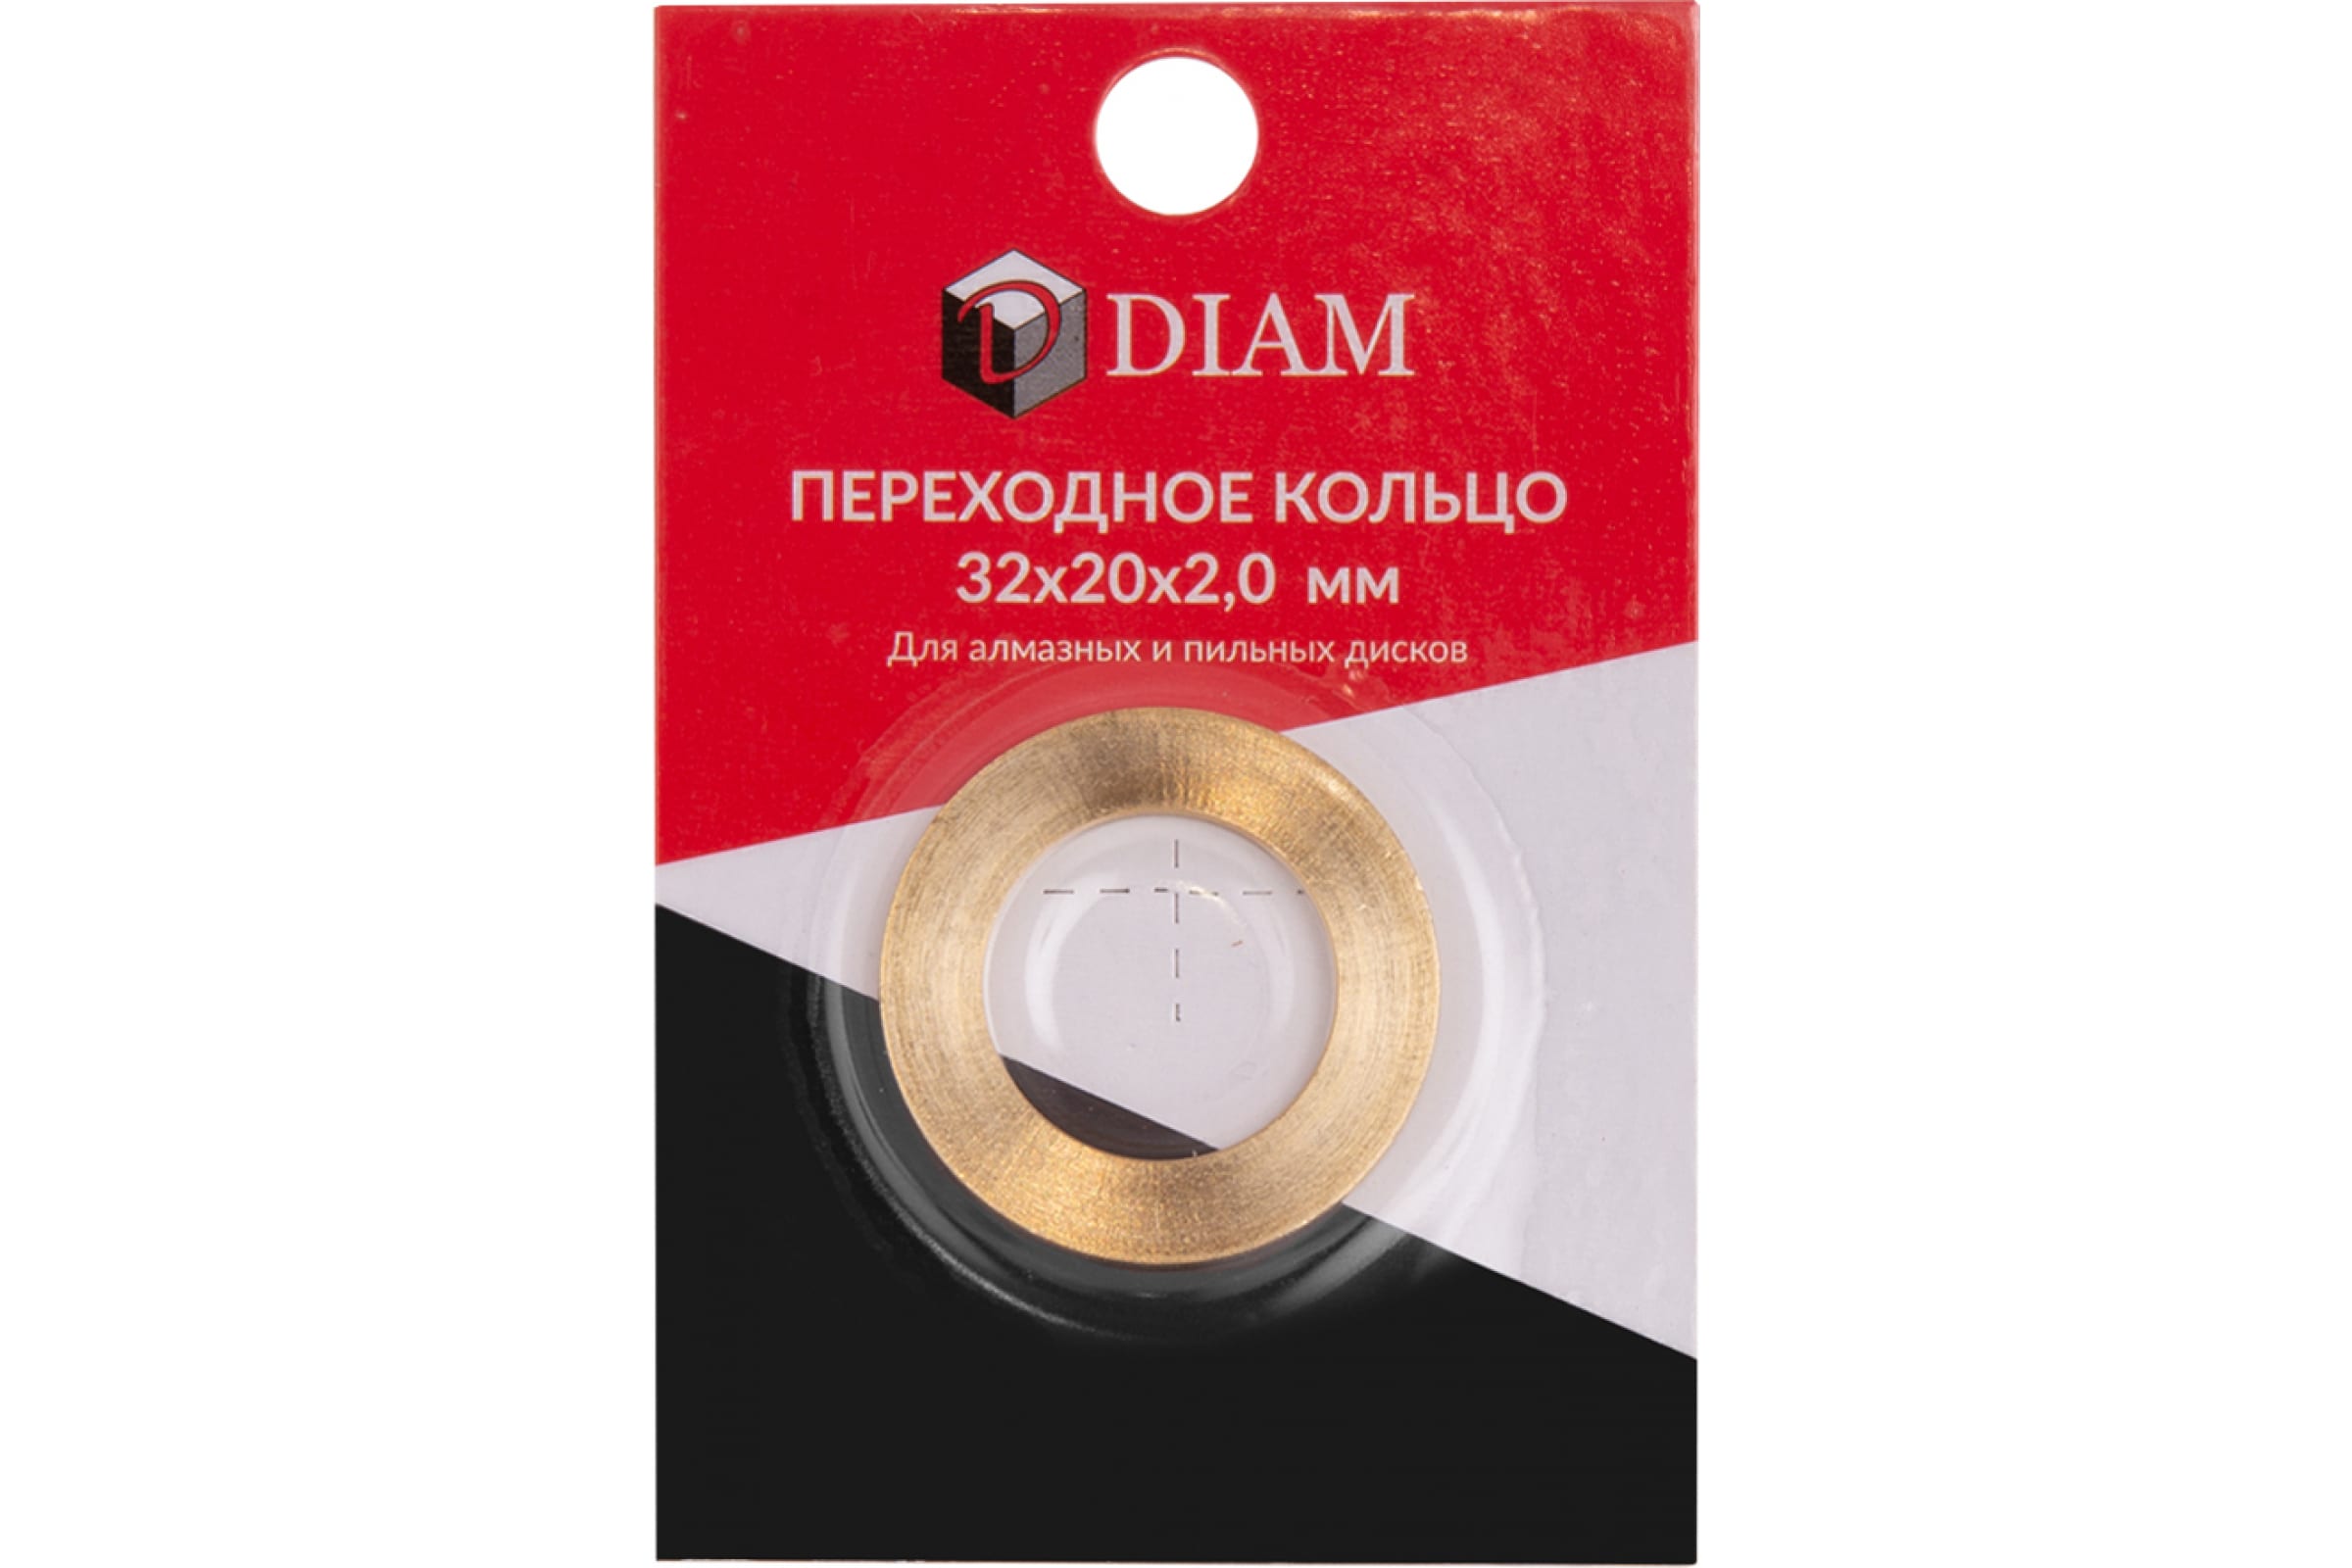 DIAM Переходное кольцо 32х20х2,0 640085 переходное кольцо для бензорезчиков stihl monogram